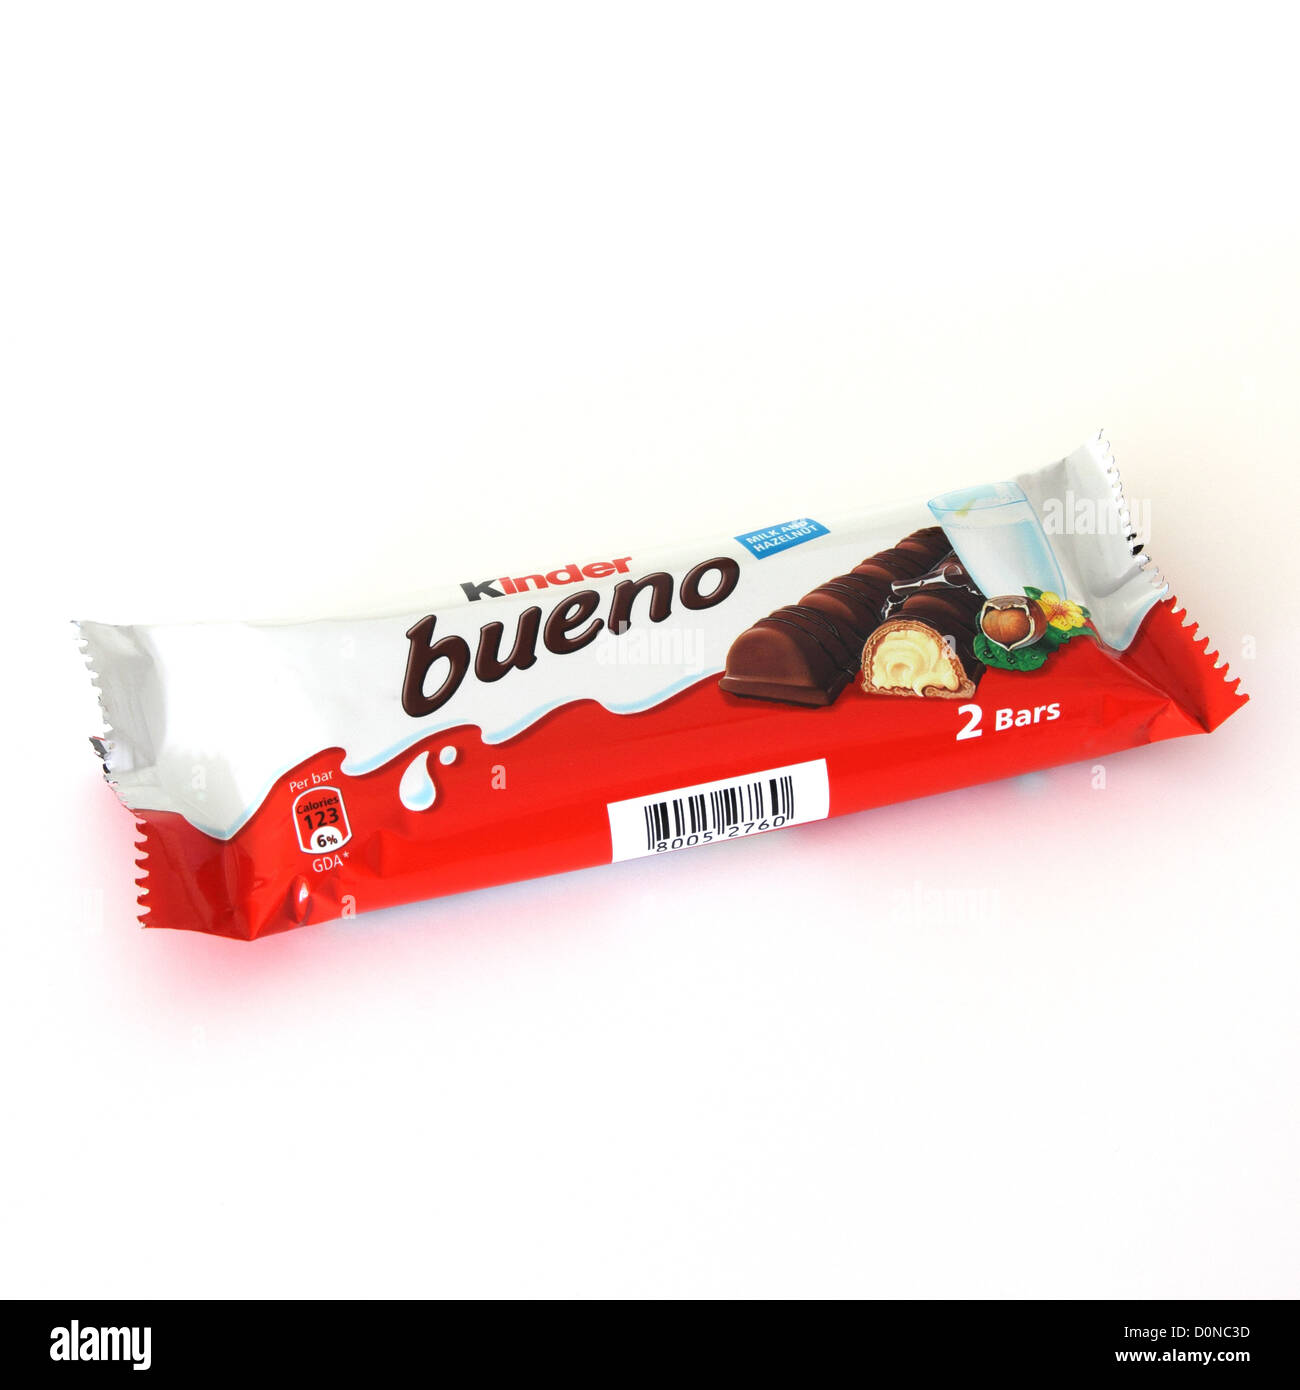 Kinder bueno chocolate bar hi-res stock photography and images - Alamy